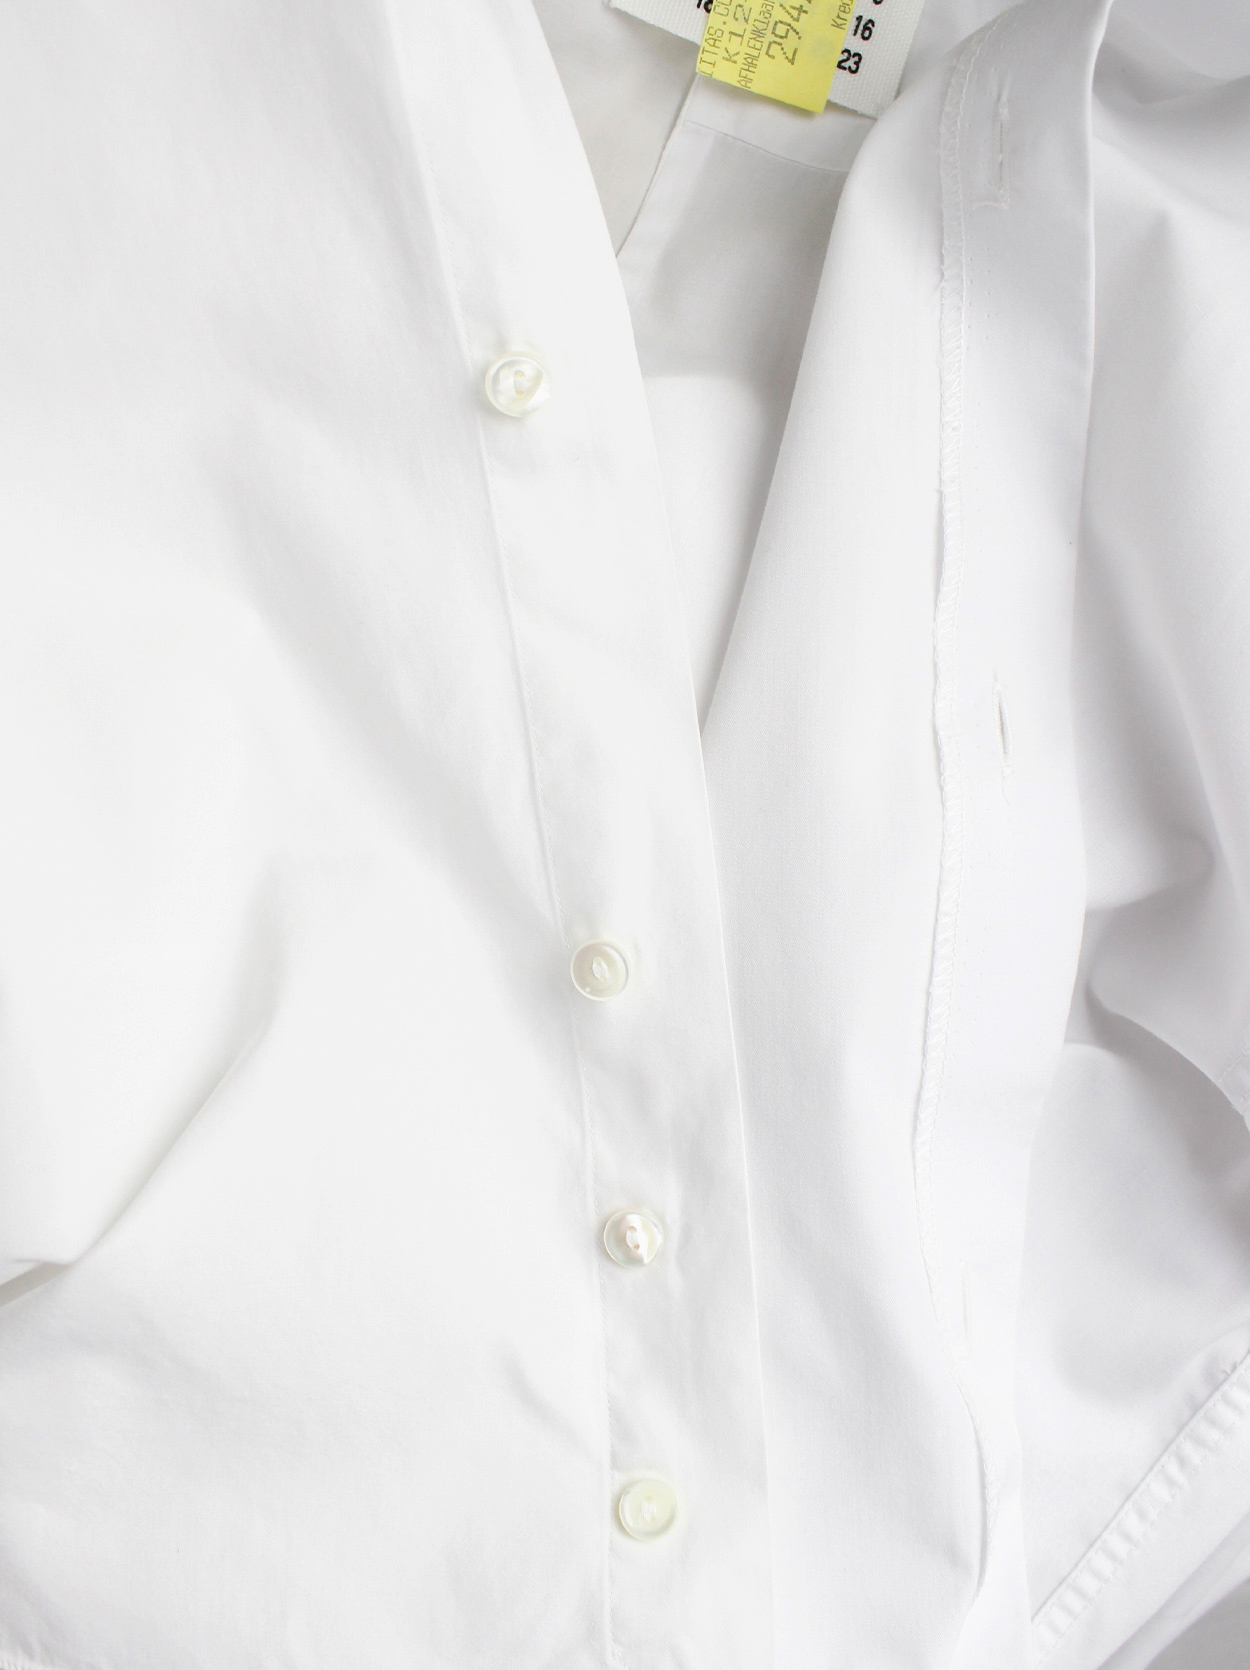 Maison Martin Margiela artisanal white shirt made of two different ...